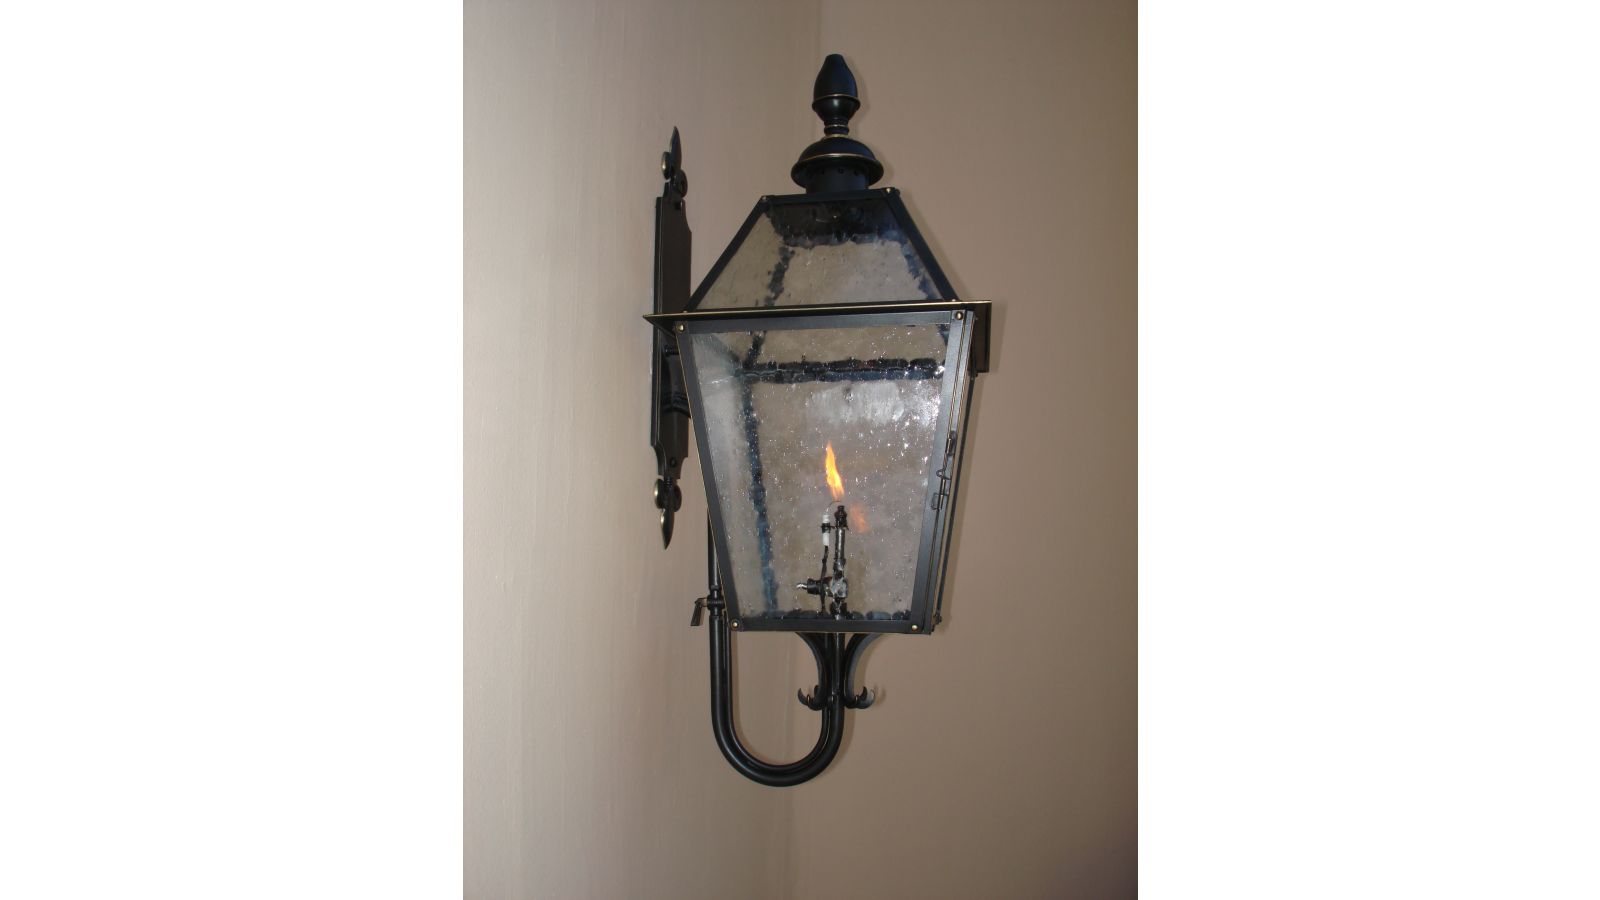 Custom wall mounted gas lantern